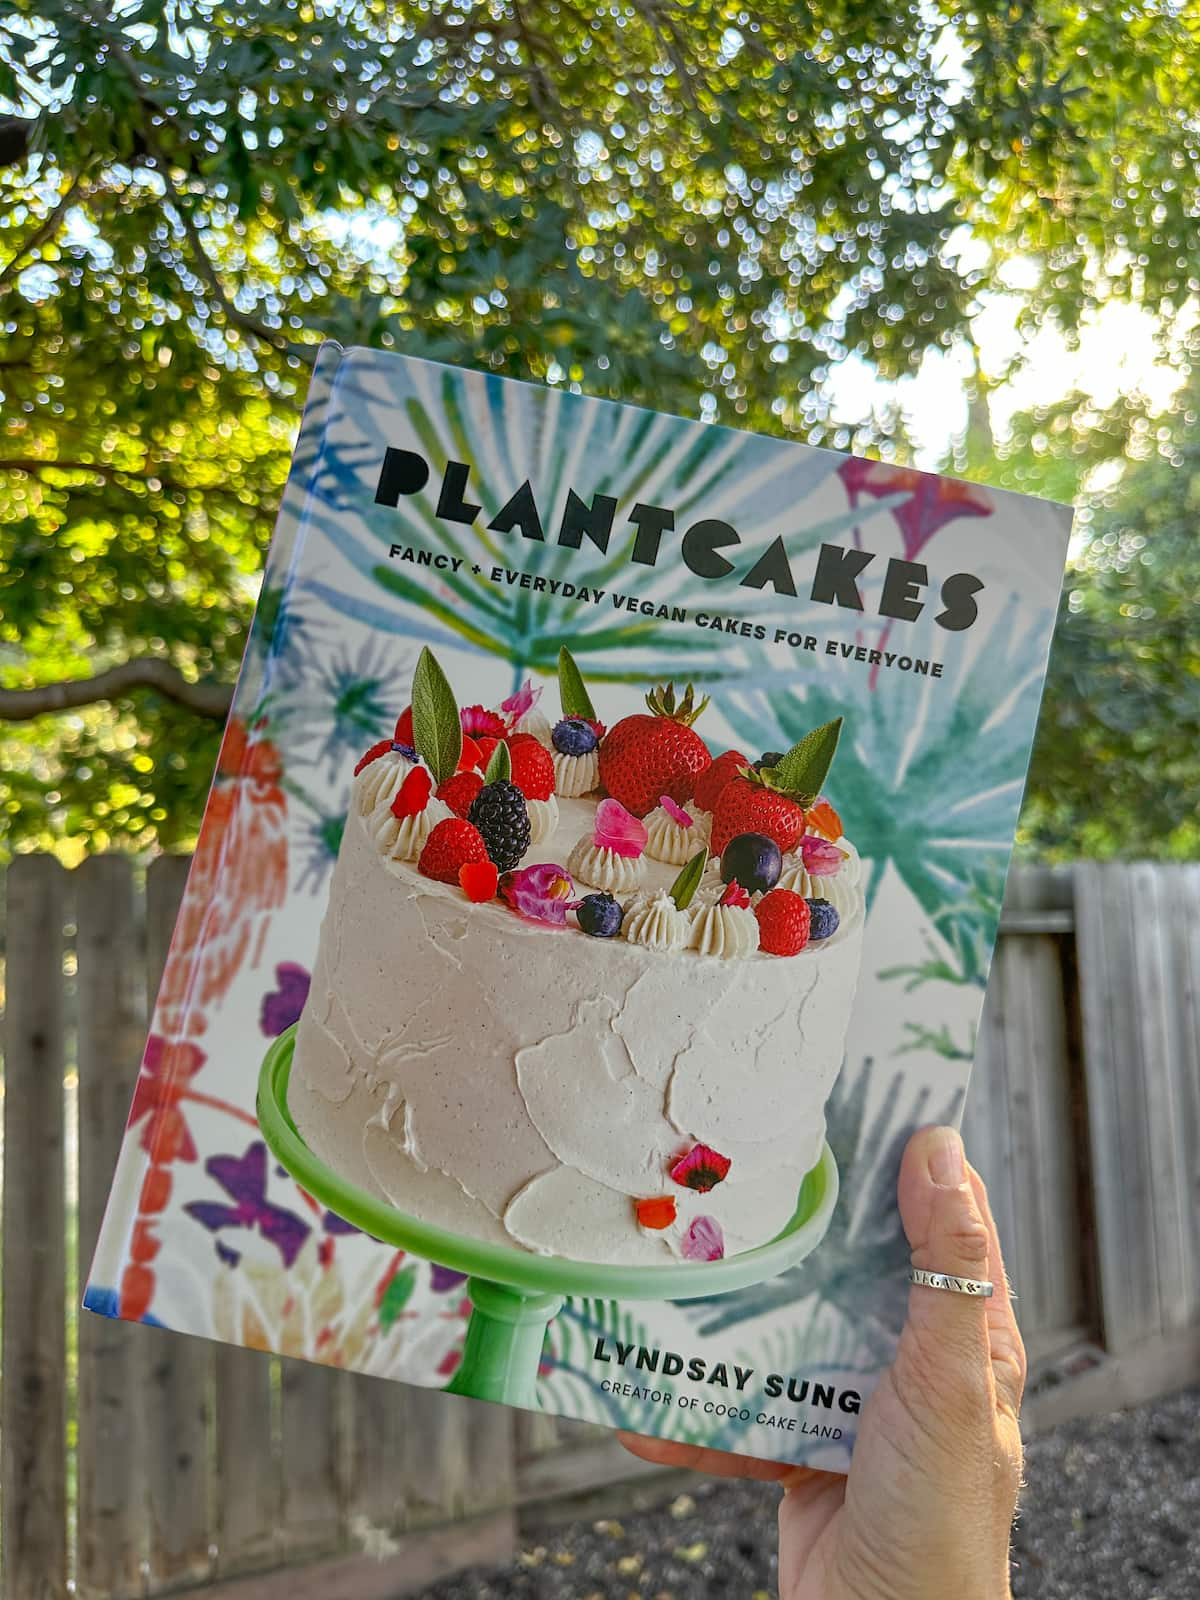 Cover art for Plantcakes Vegan Cakes by Lyndsay Sung.